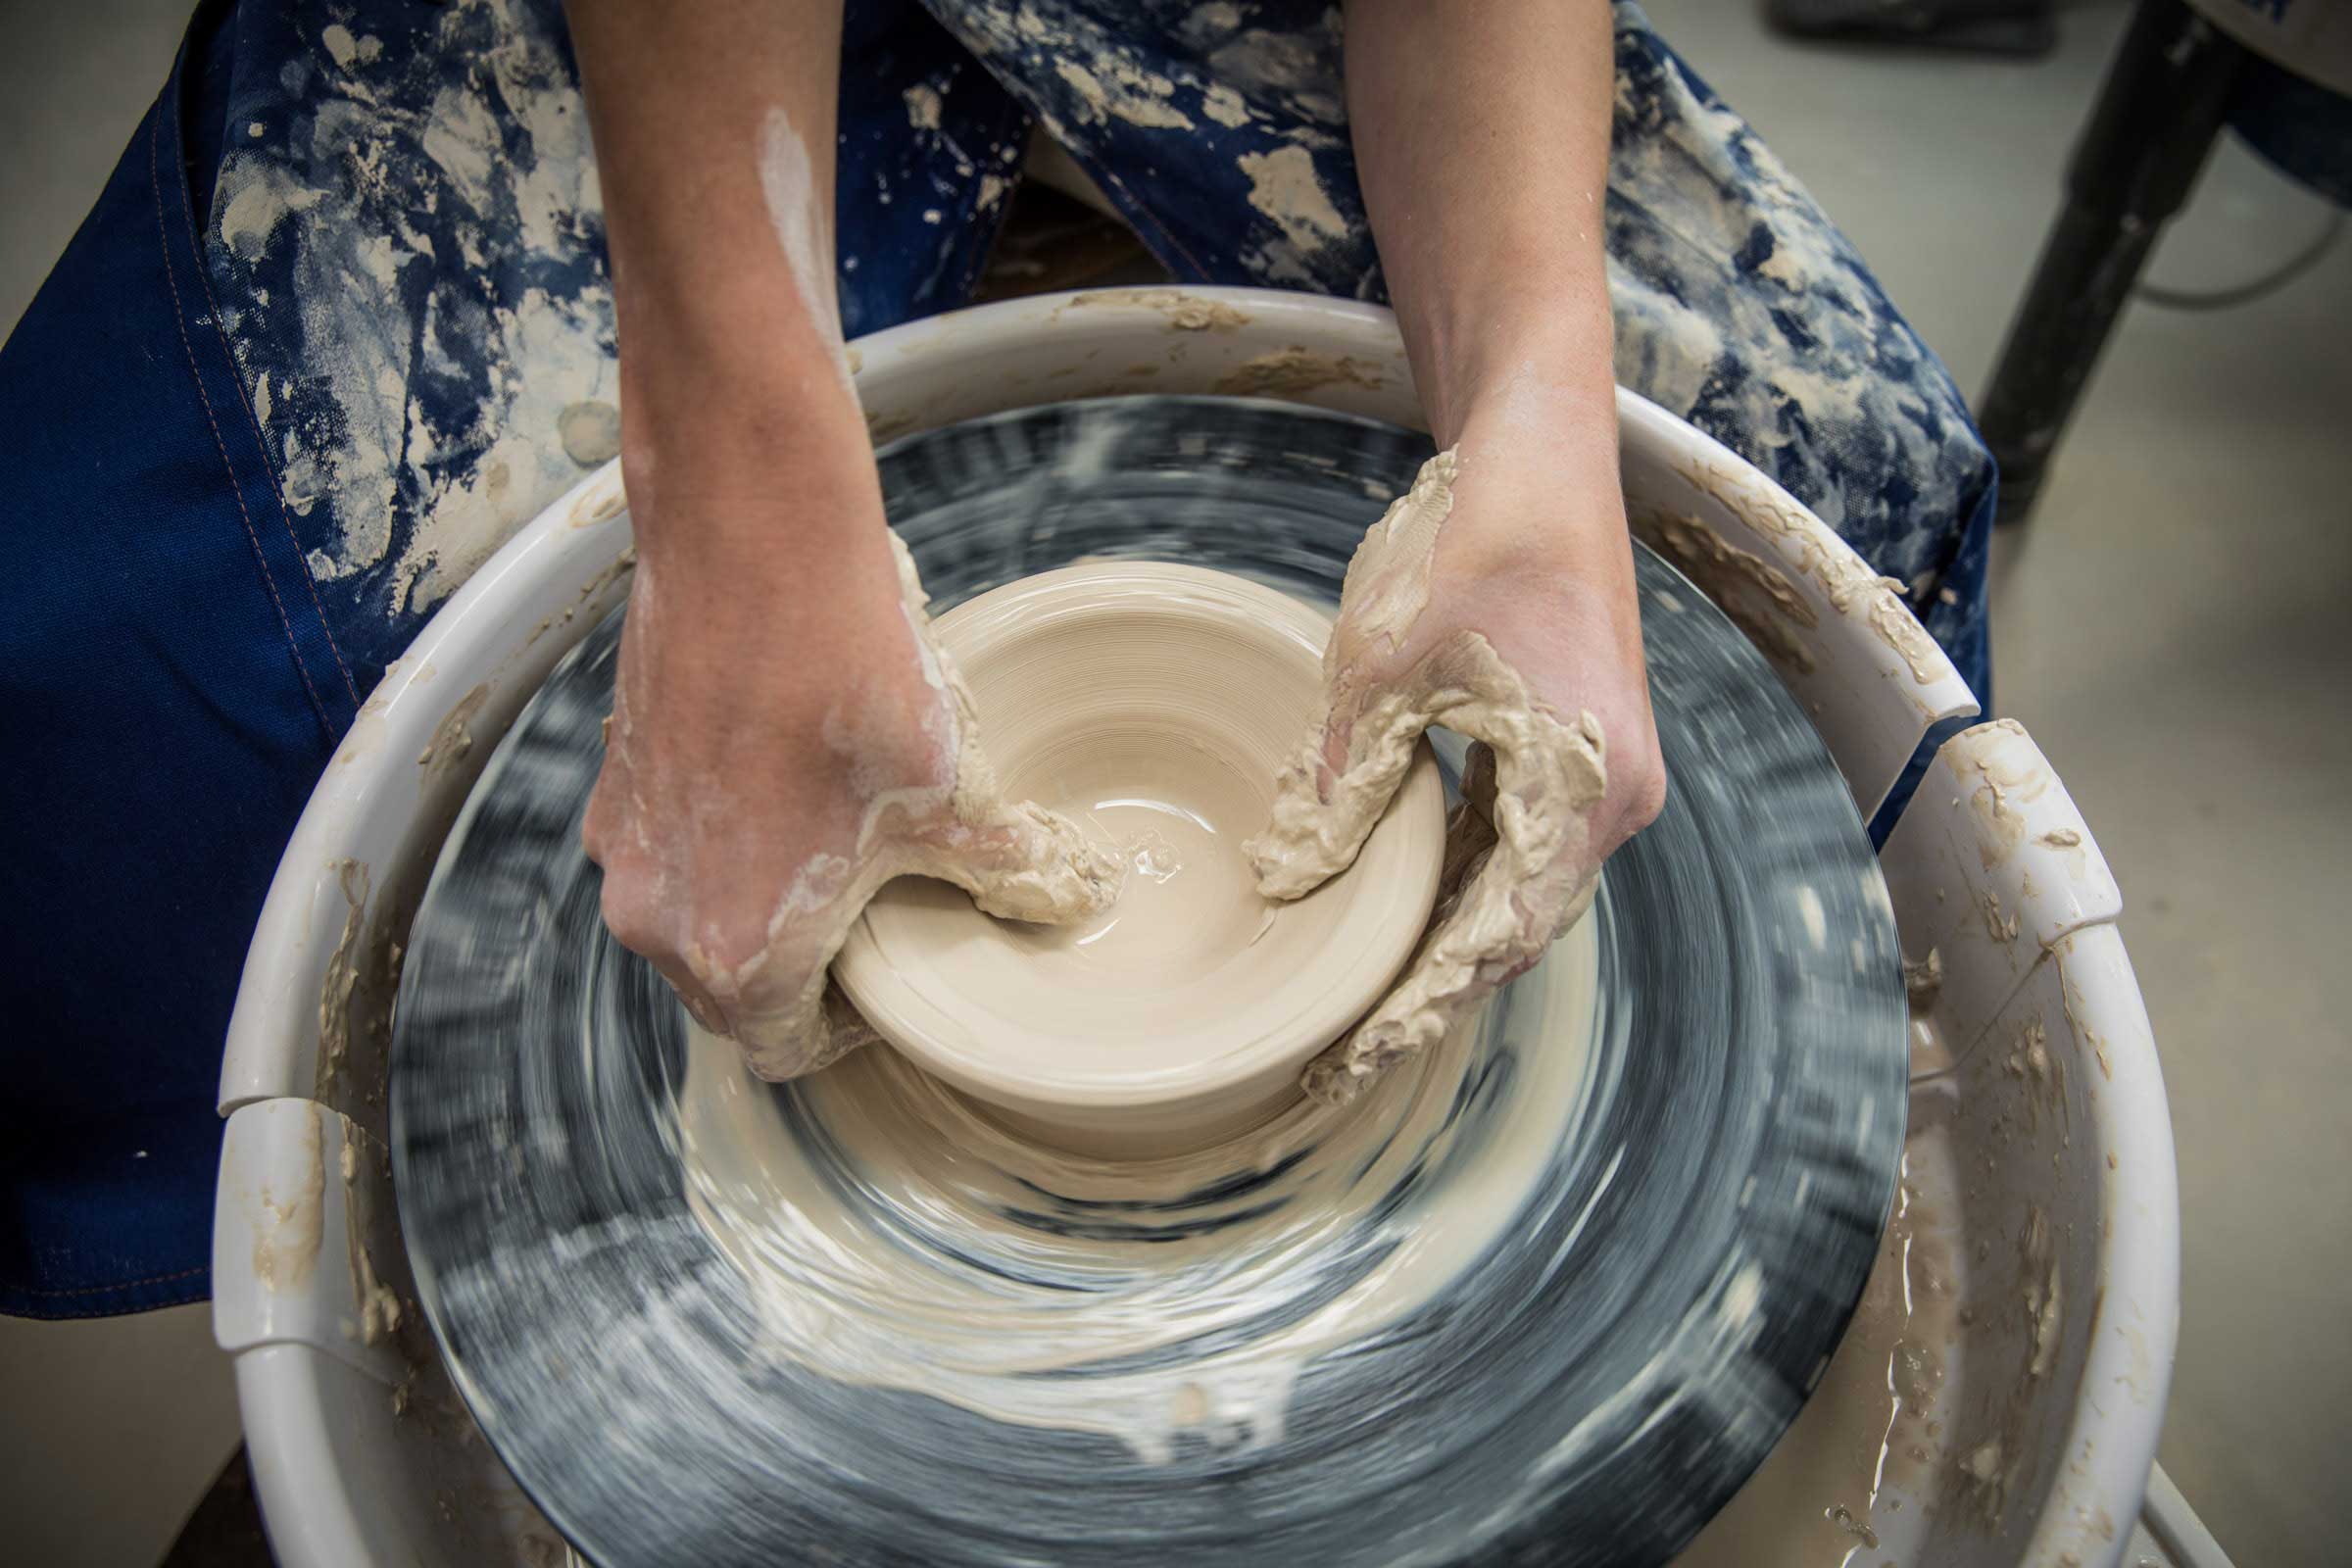 Working in the ceramics studio at Forman